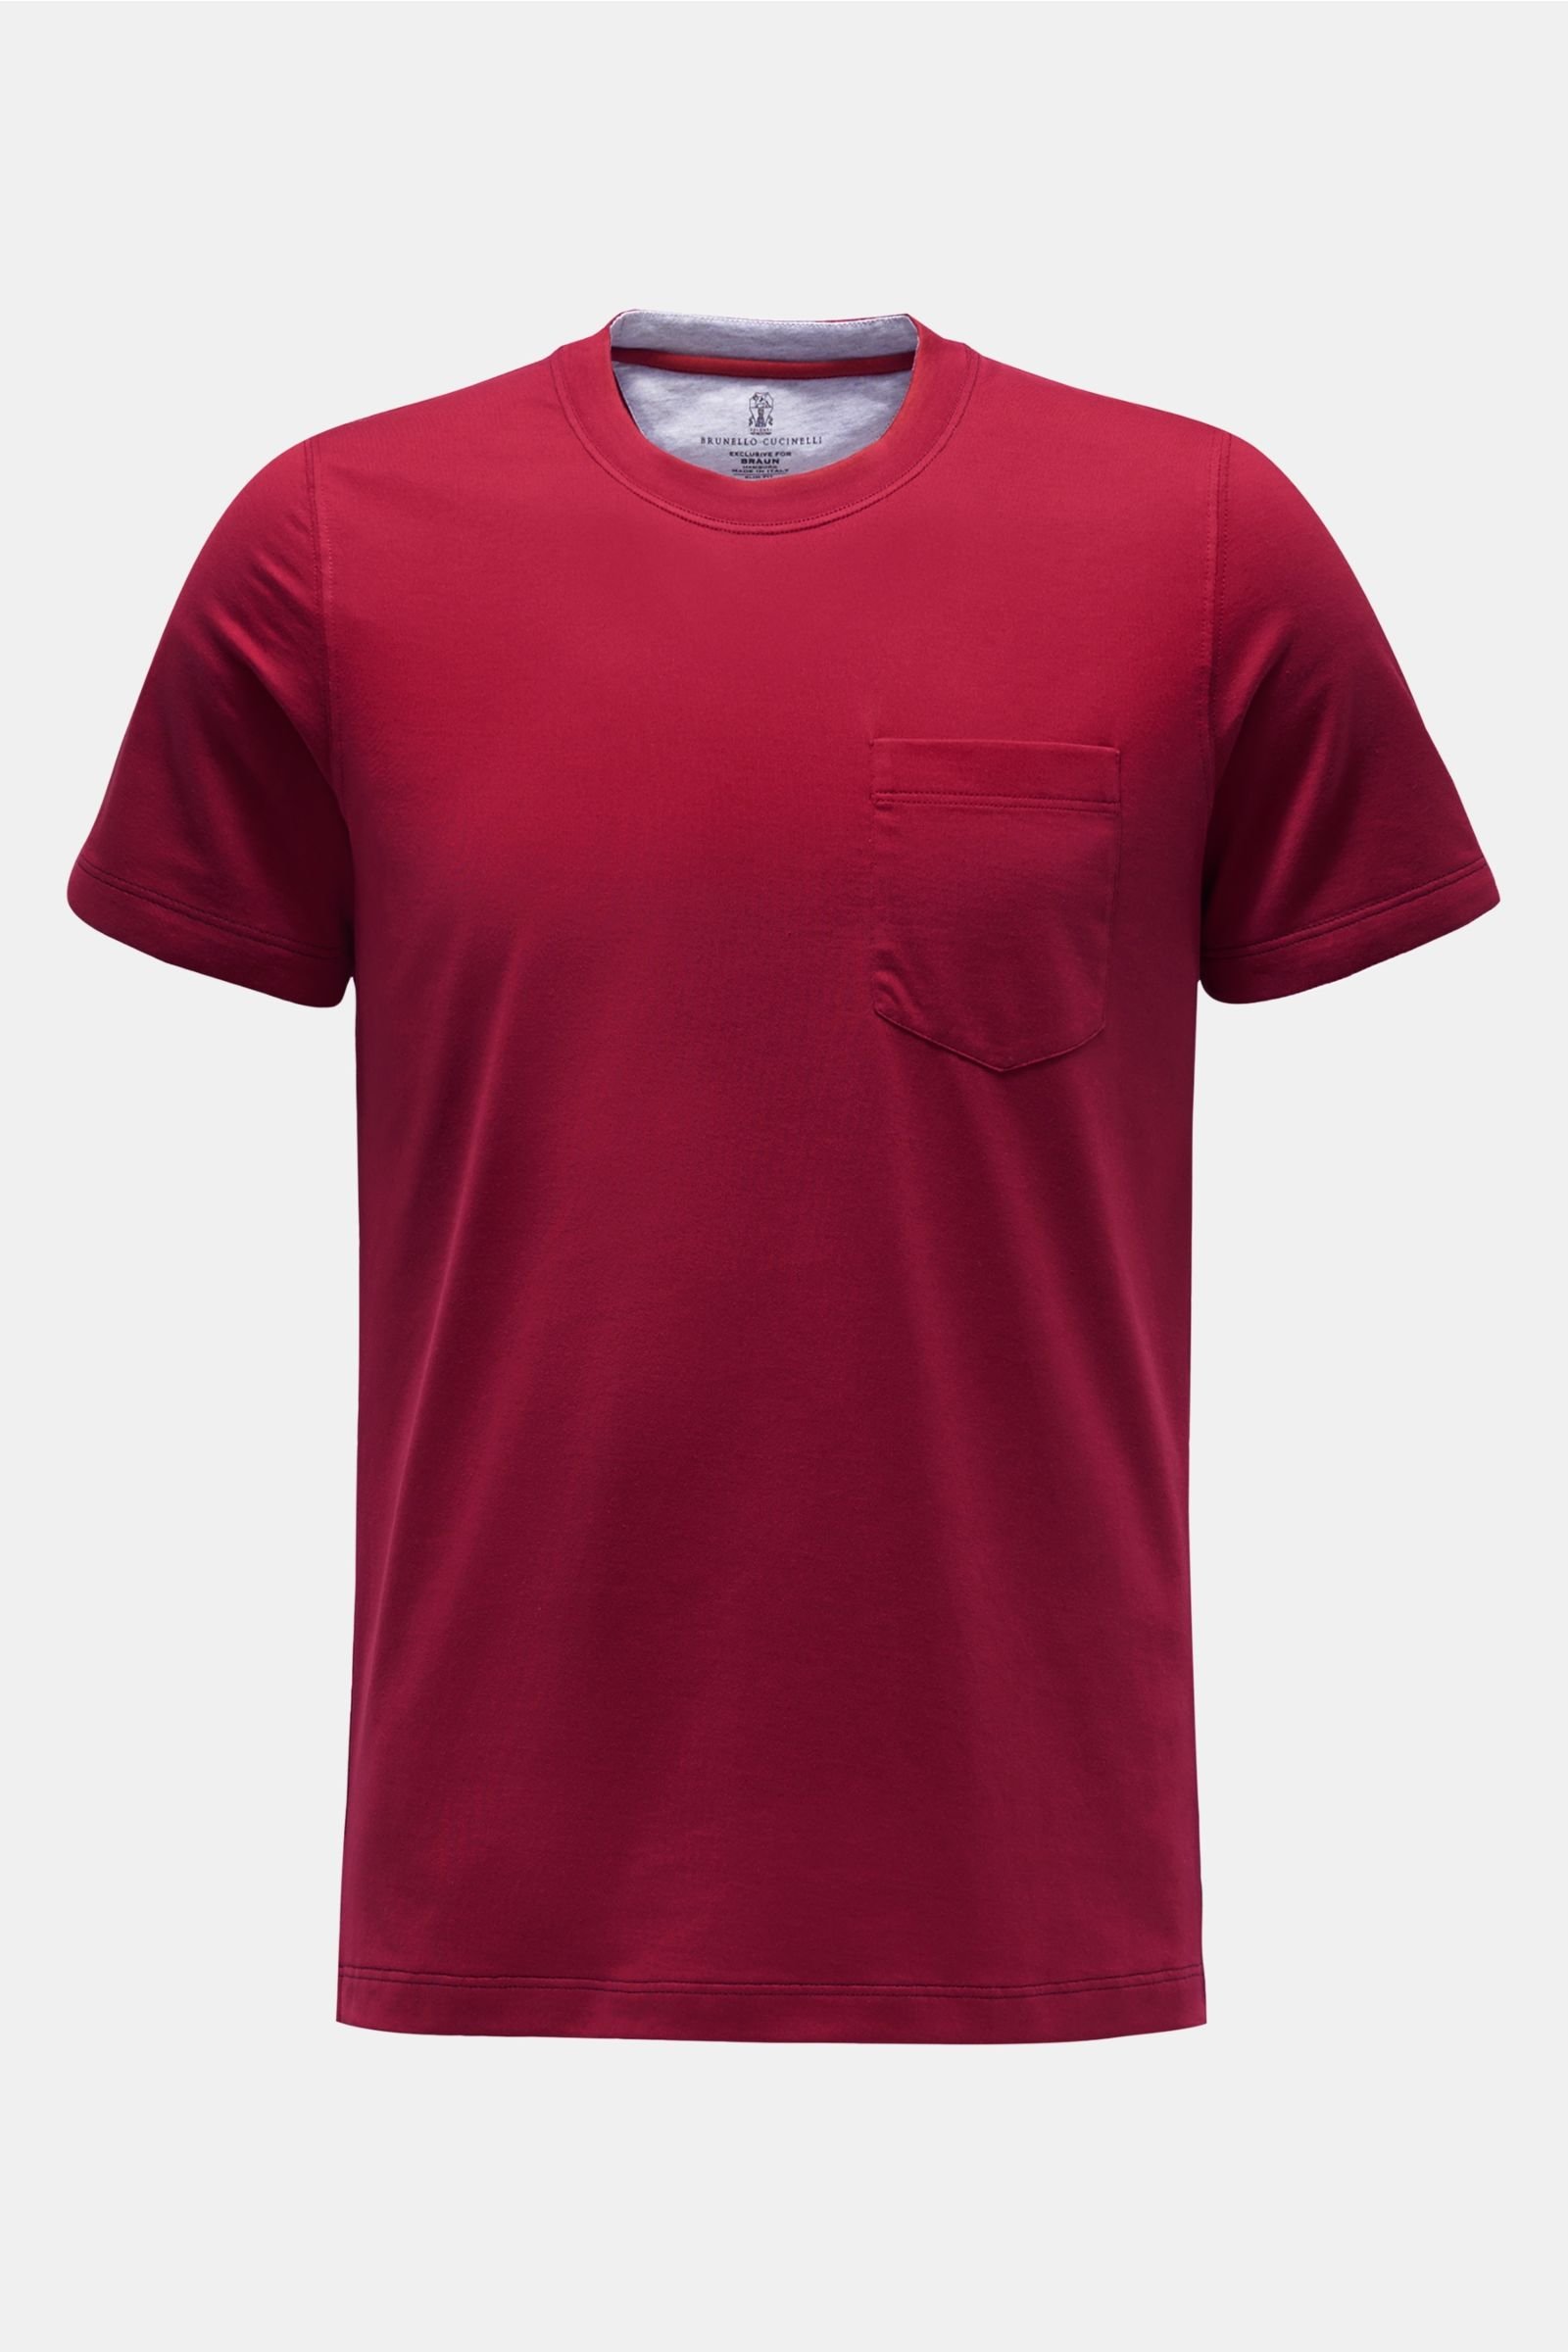 Crew neck T-shirt dark red